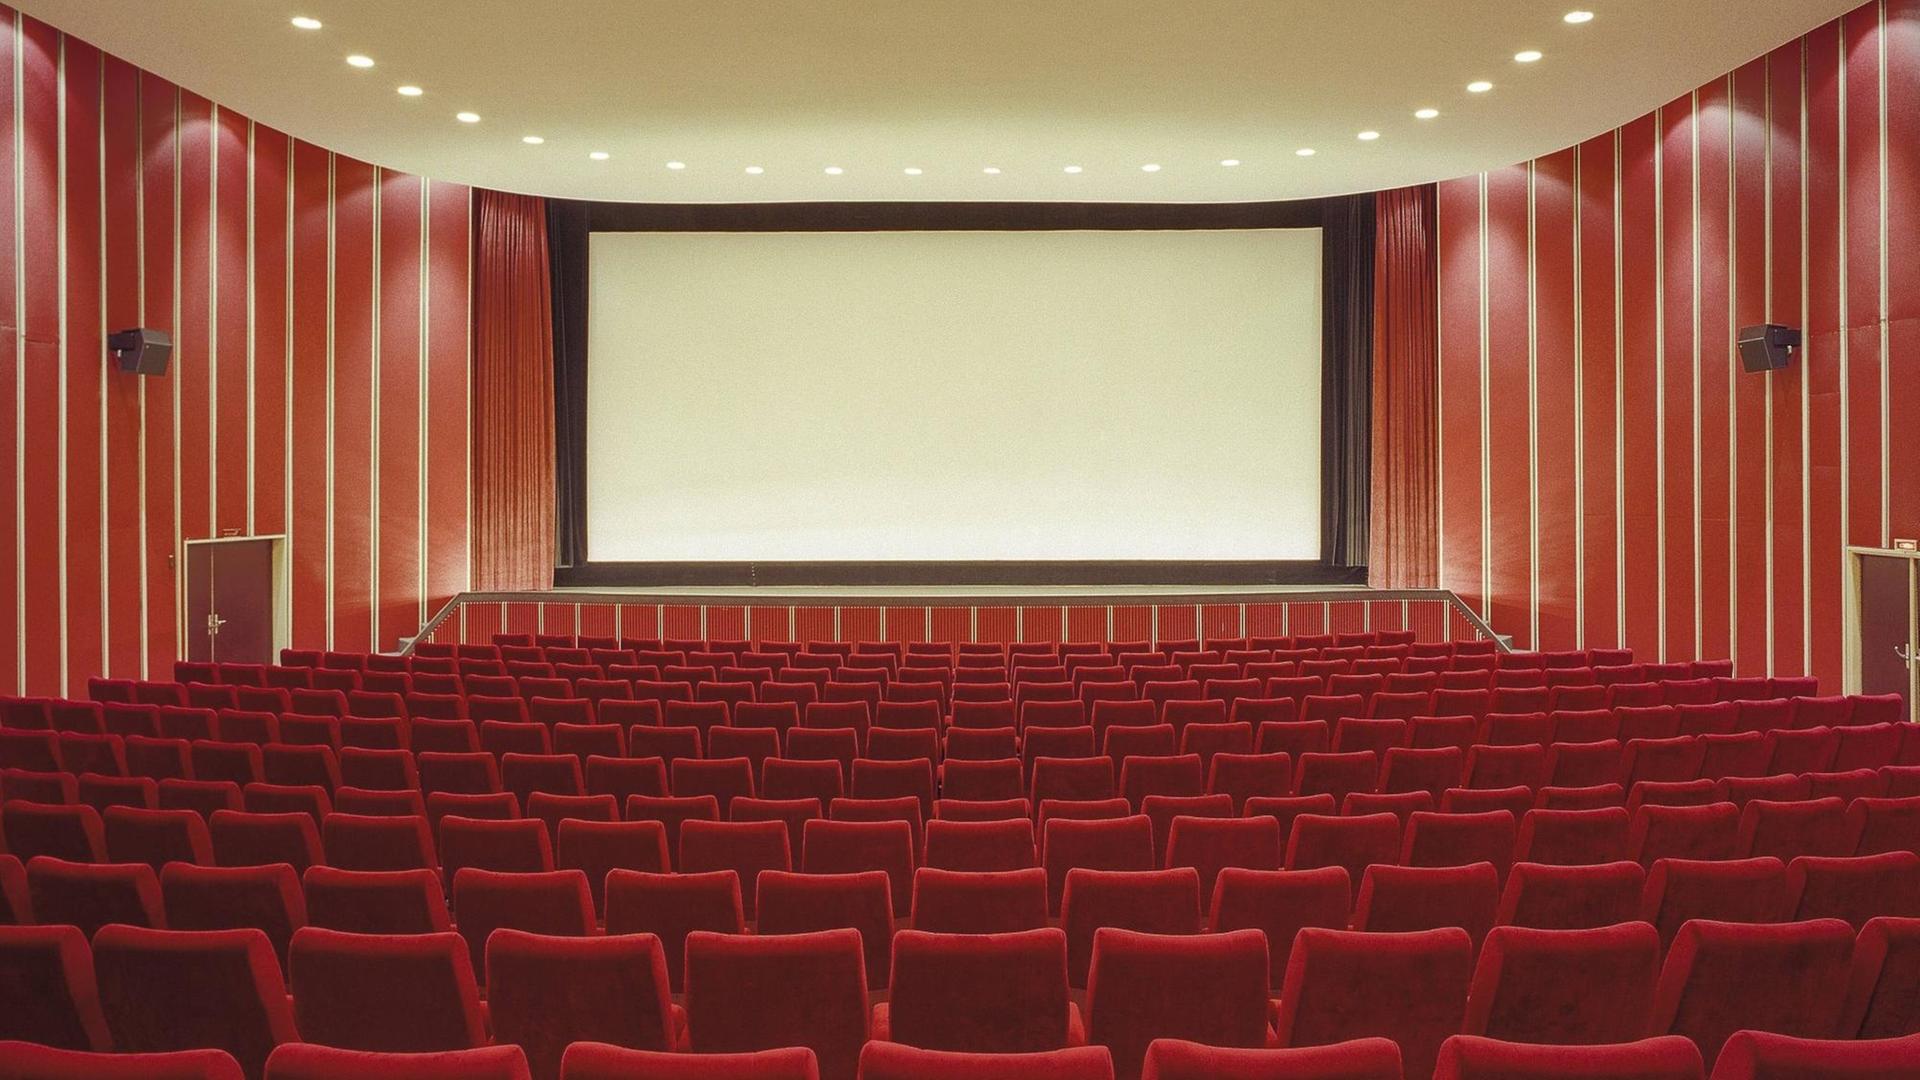 Ein Kino-Saal mit leeren Sitzen